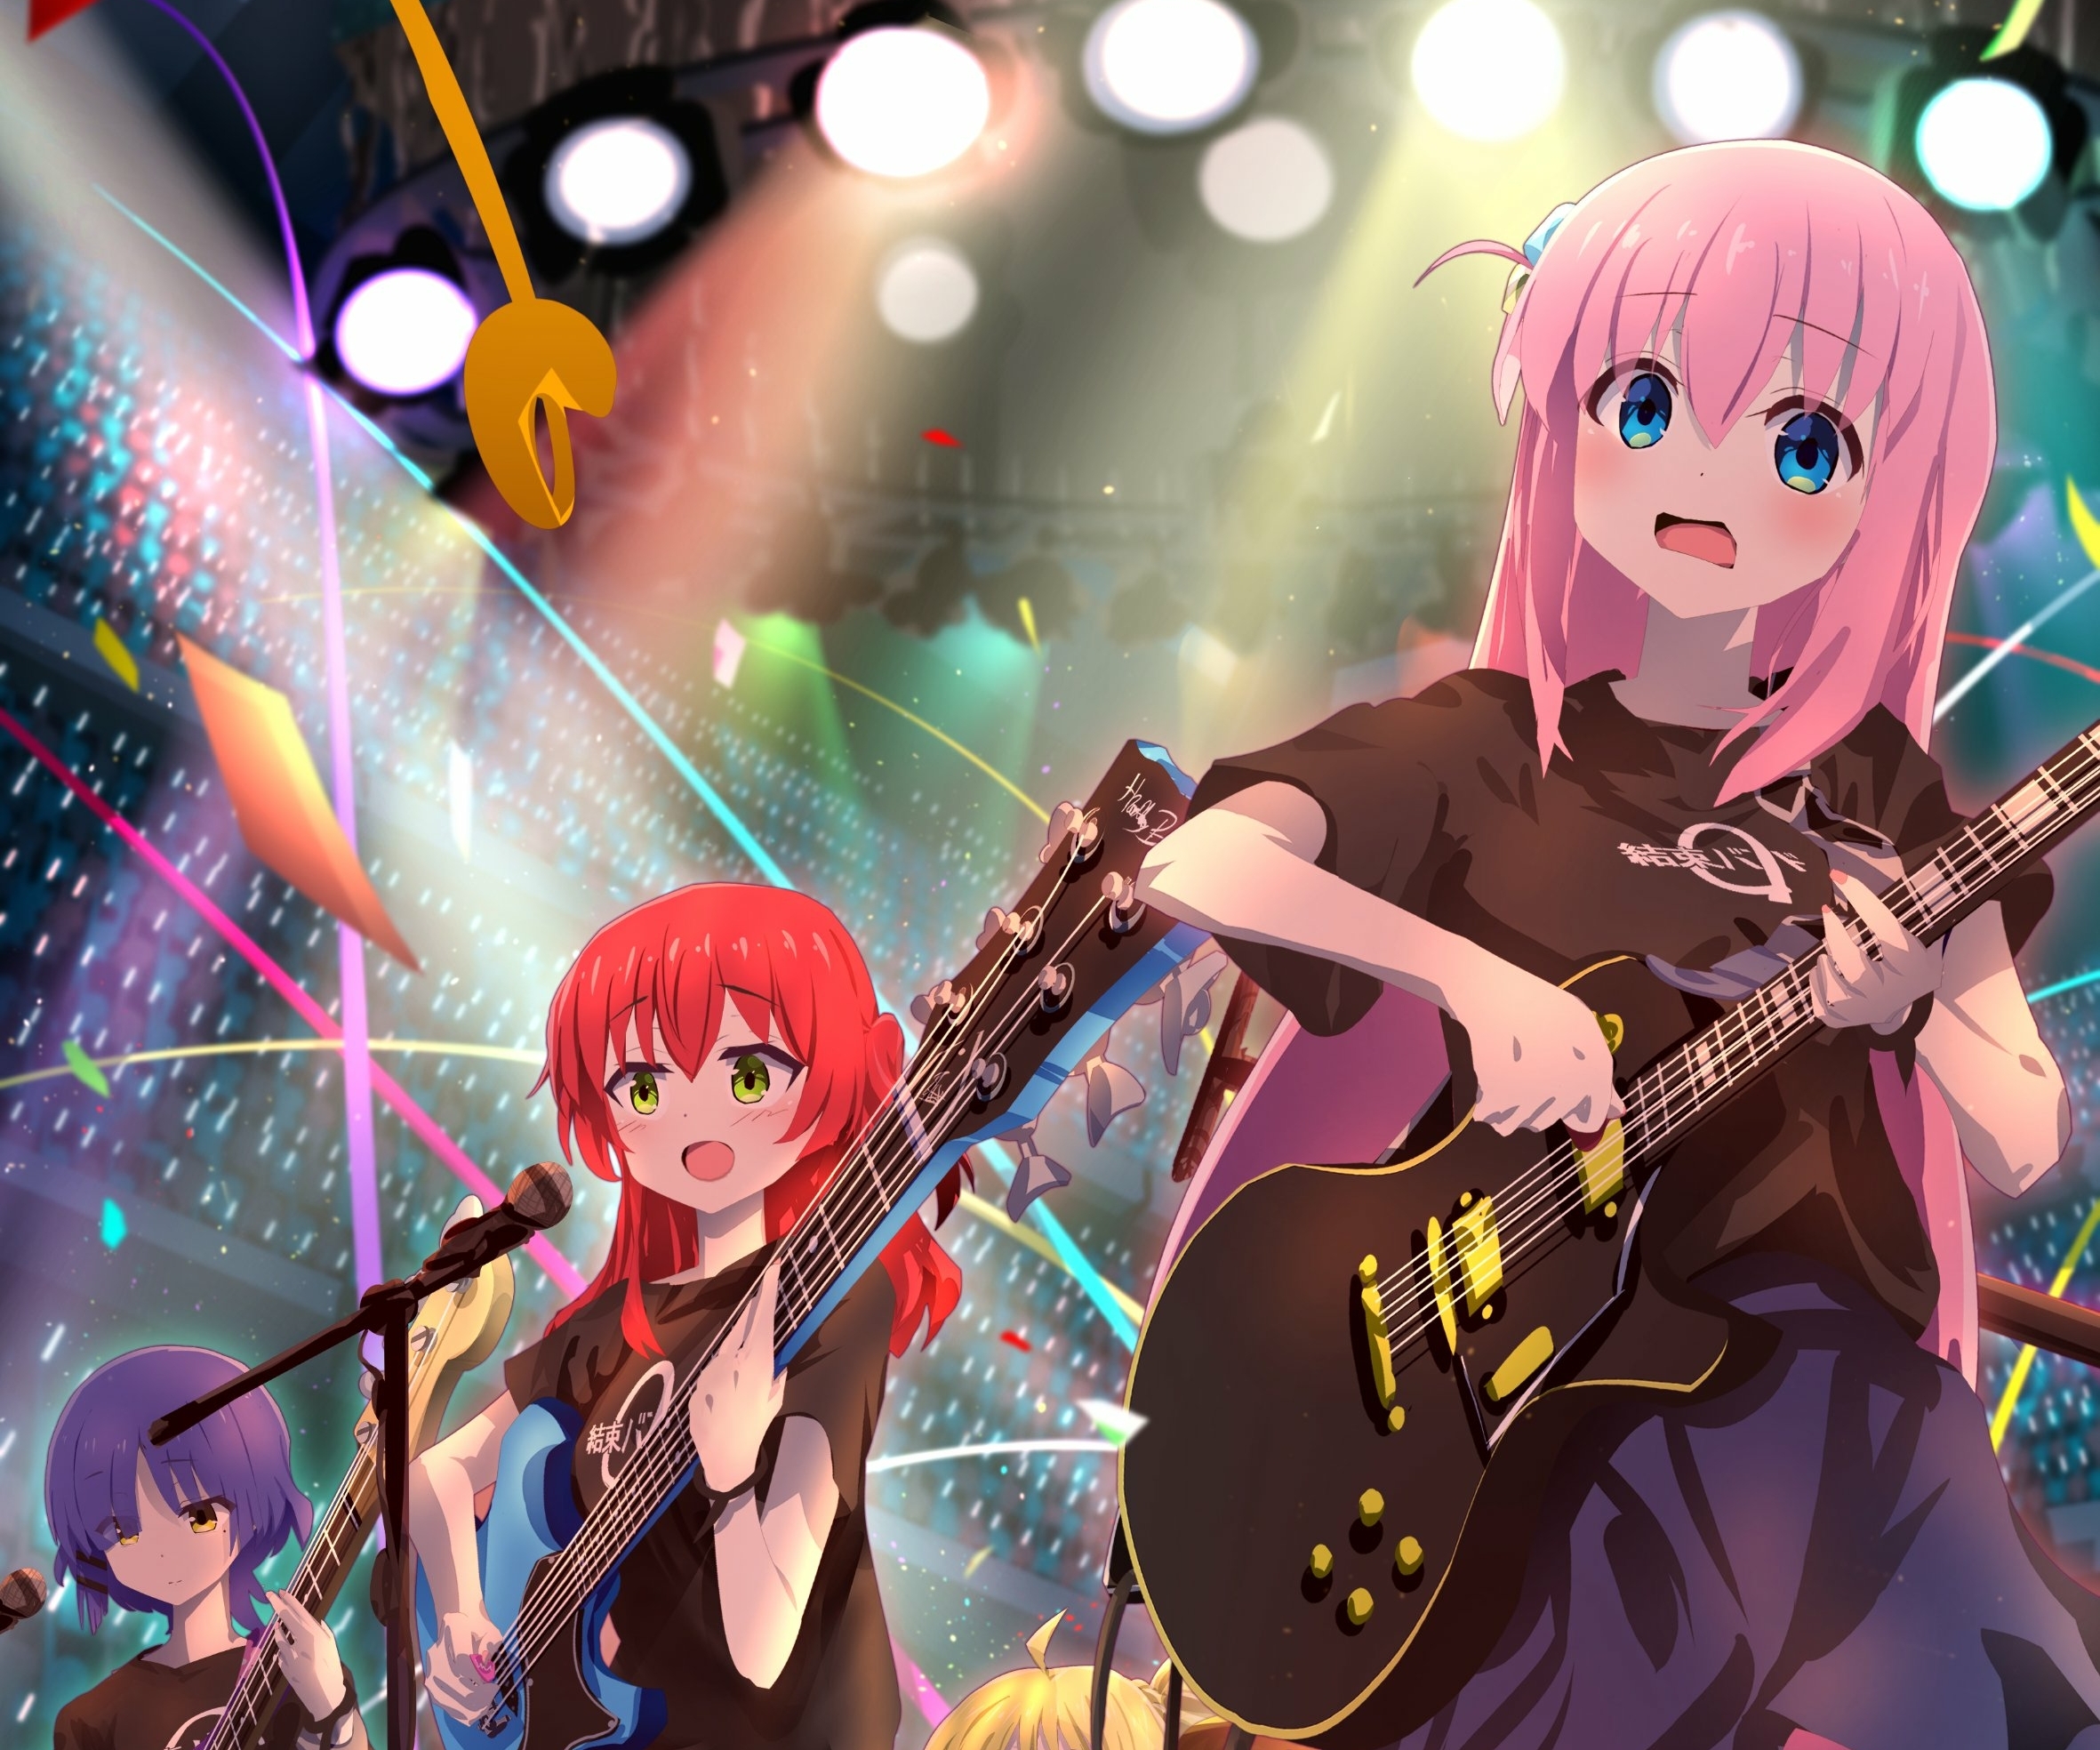 Bocchi the Rock anime girl characters fun 4K wallpaper download